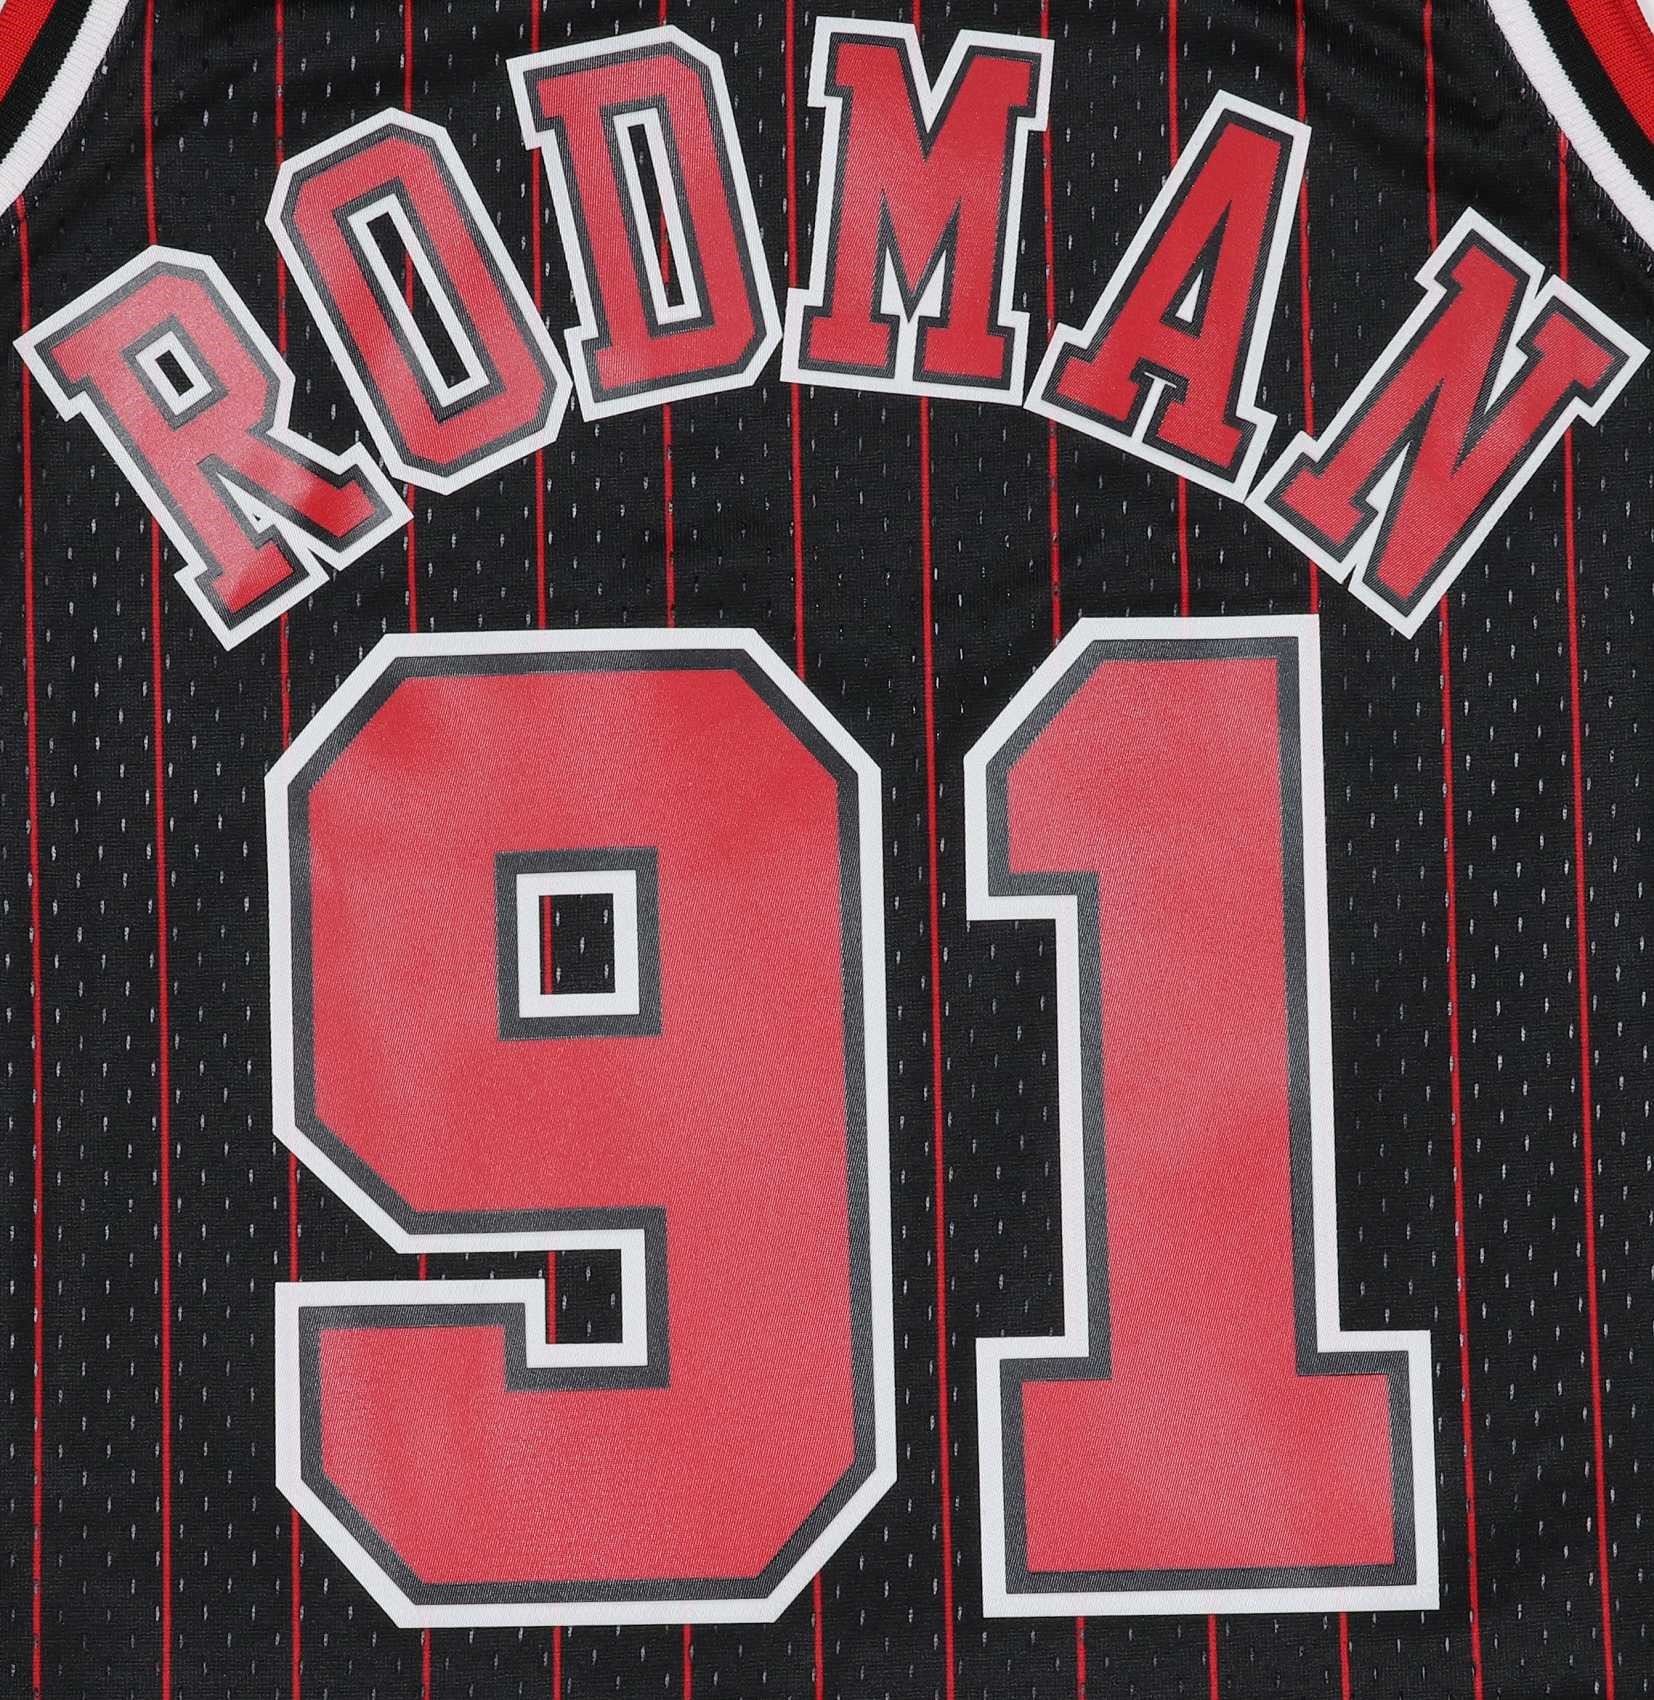 Dennis Rodman #91 Chicago Bulls NBA Swingman Jersey Mitchell & Ness